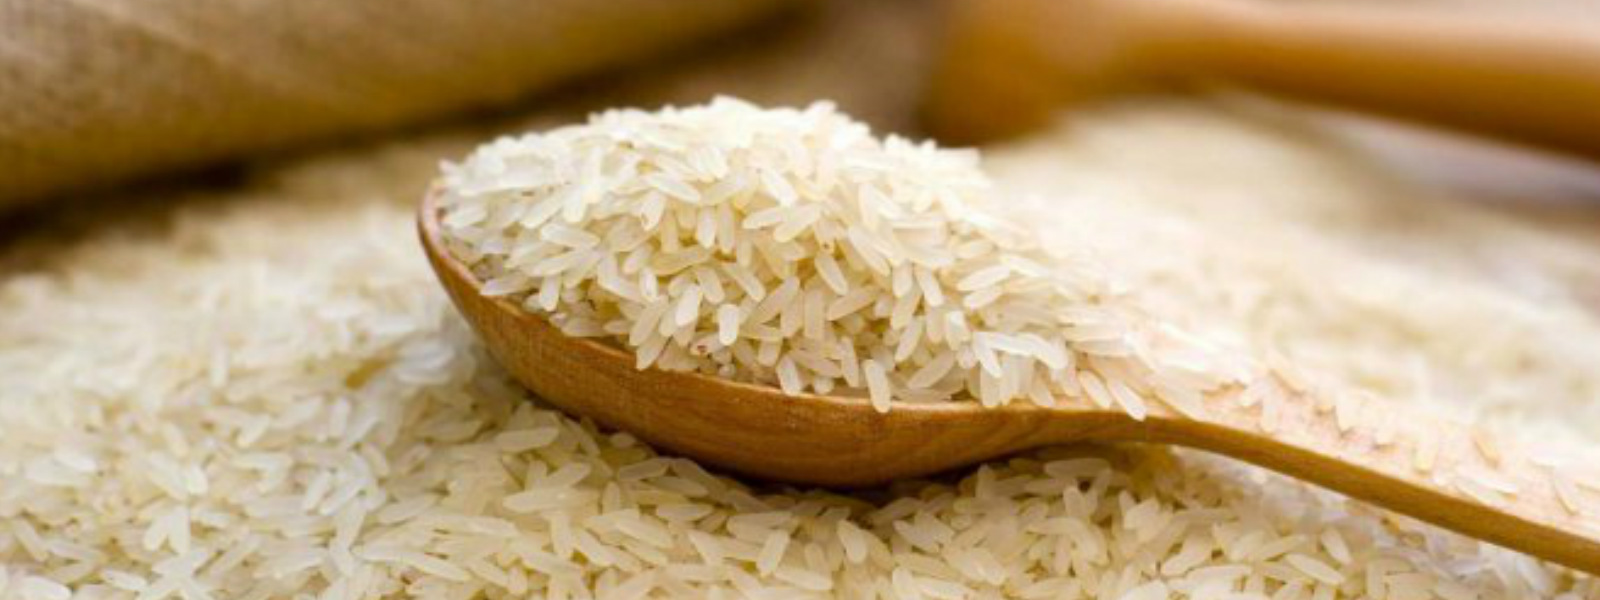 Agri Minister eliminates need for rice imports